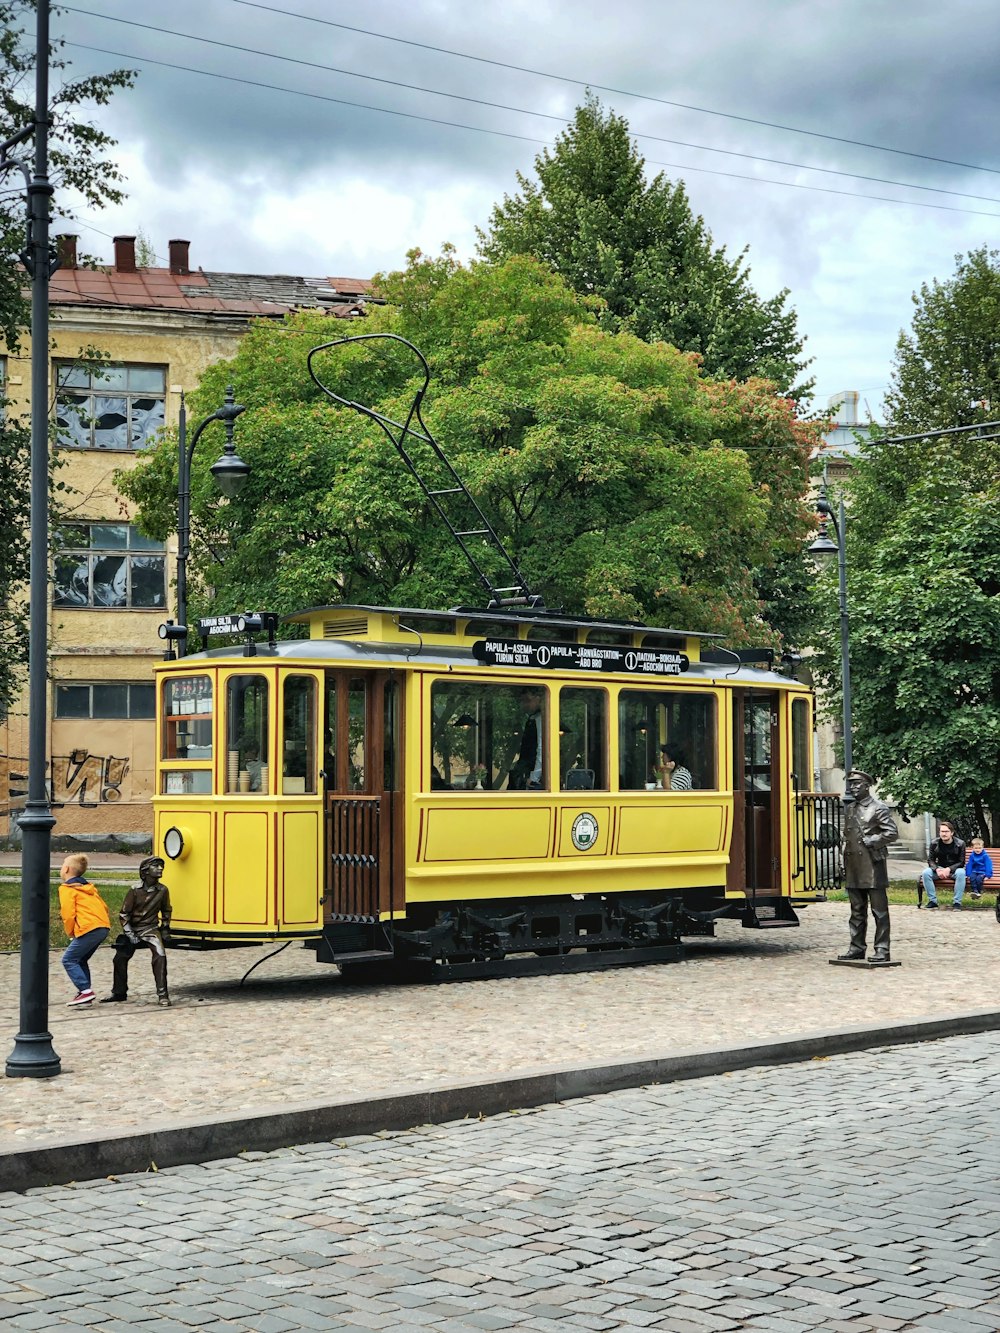 three statues beside yellow tram during daytime